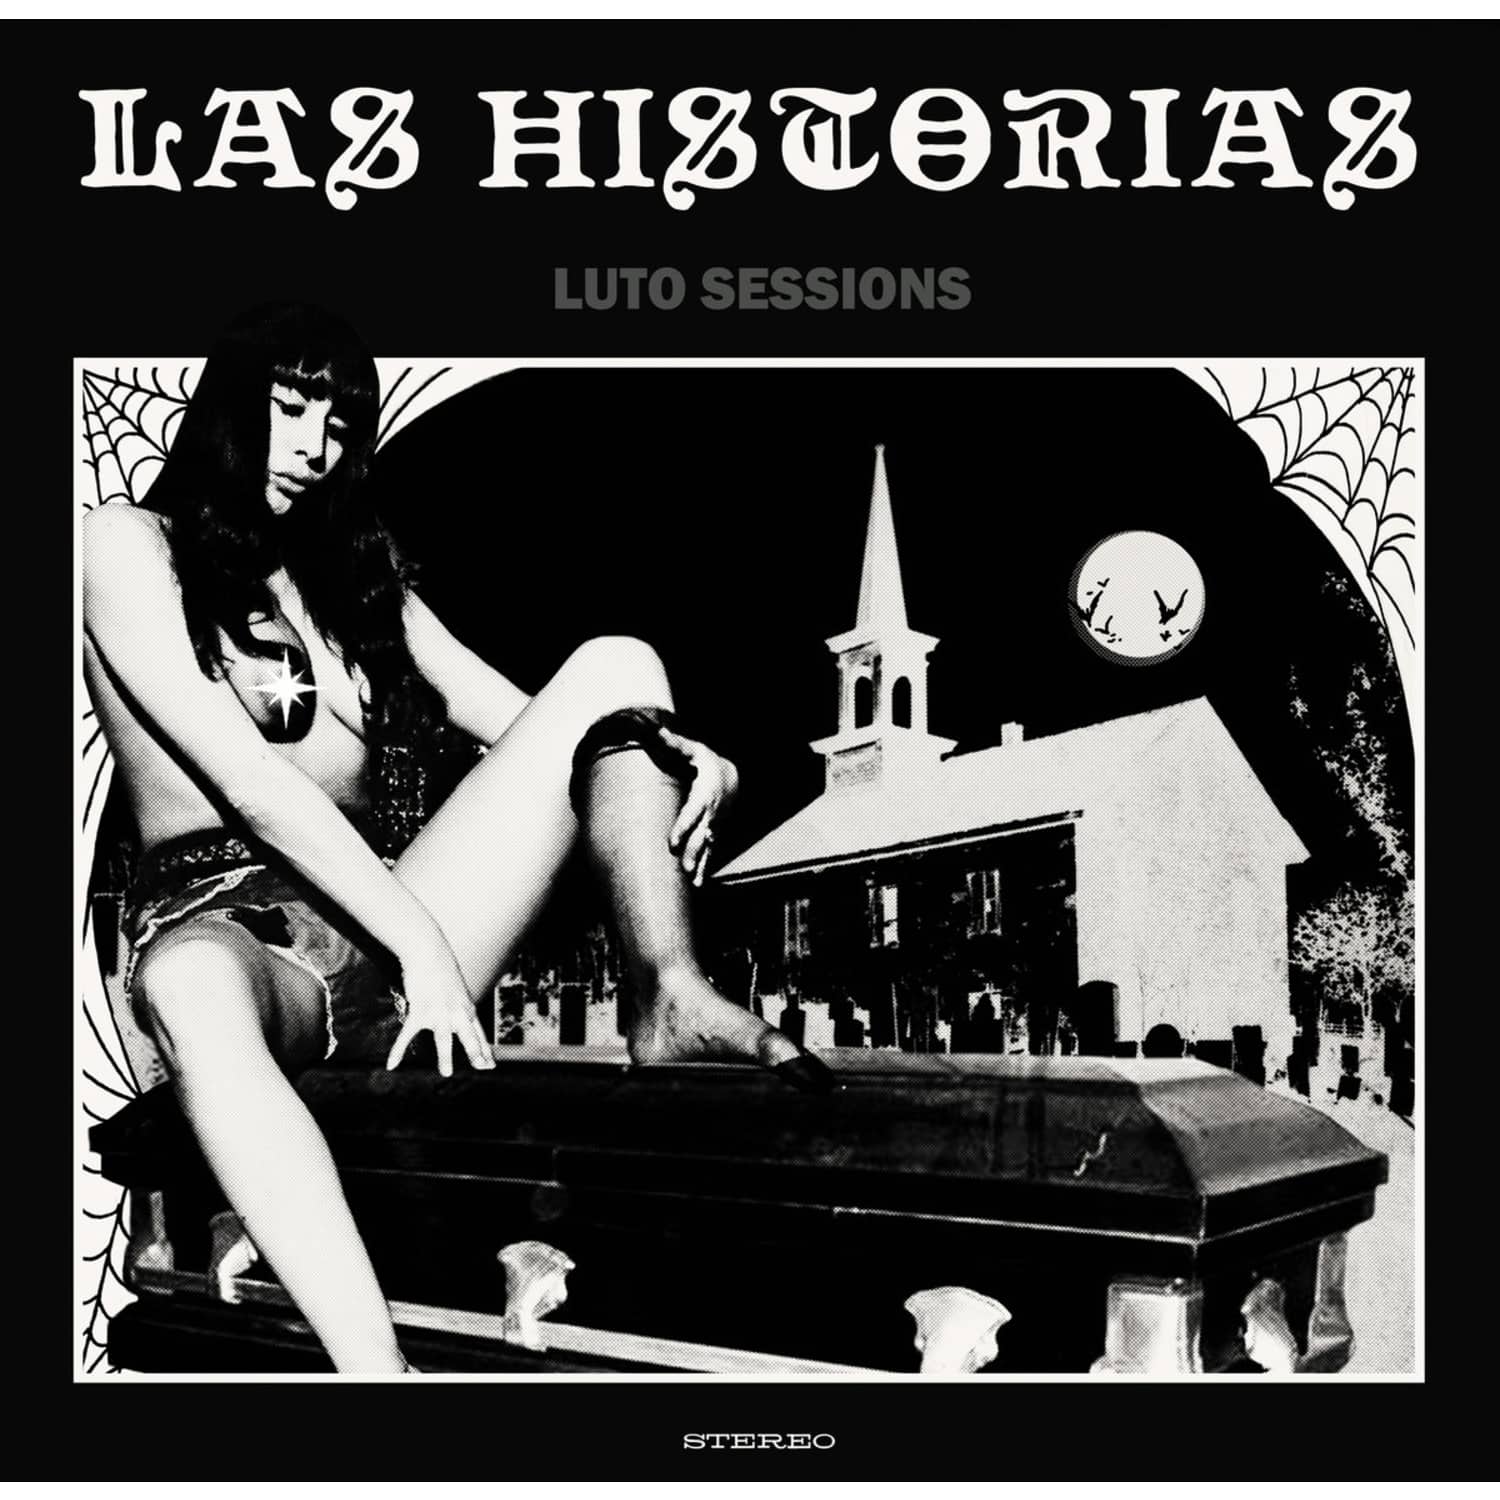 Las Historias - LUTO SESSIONS 